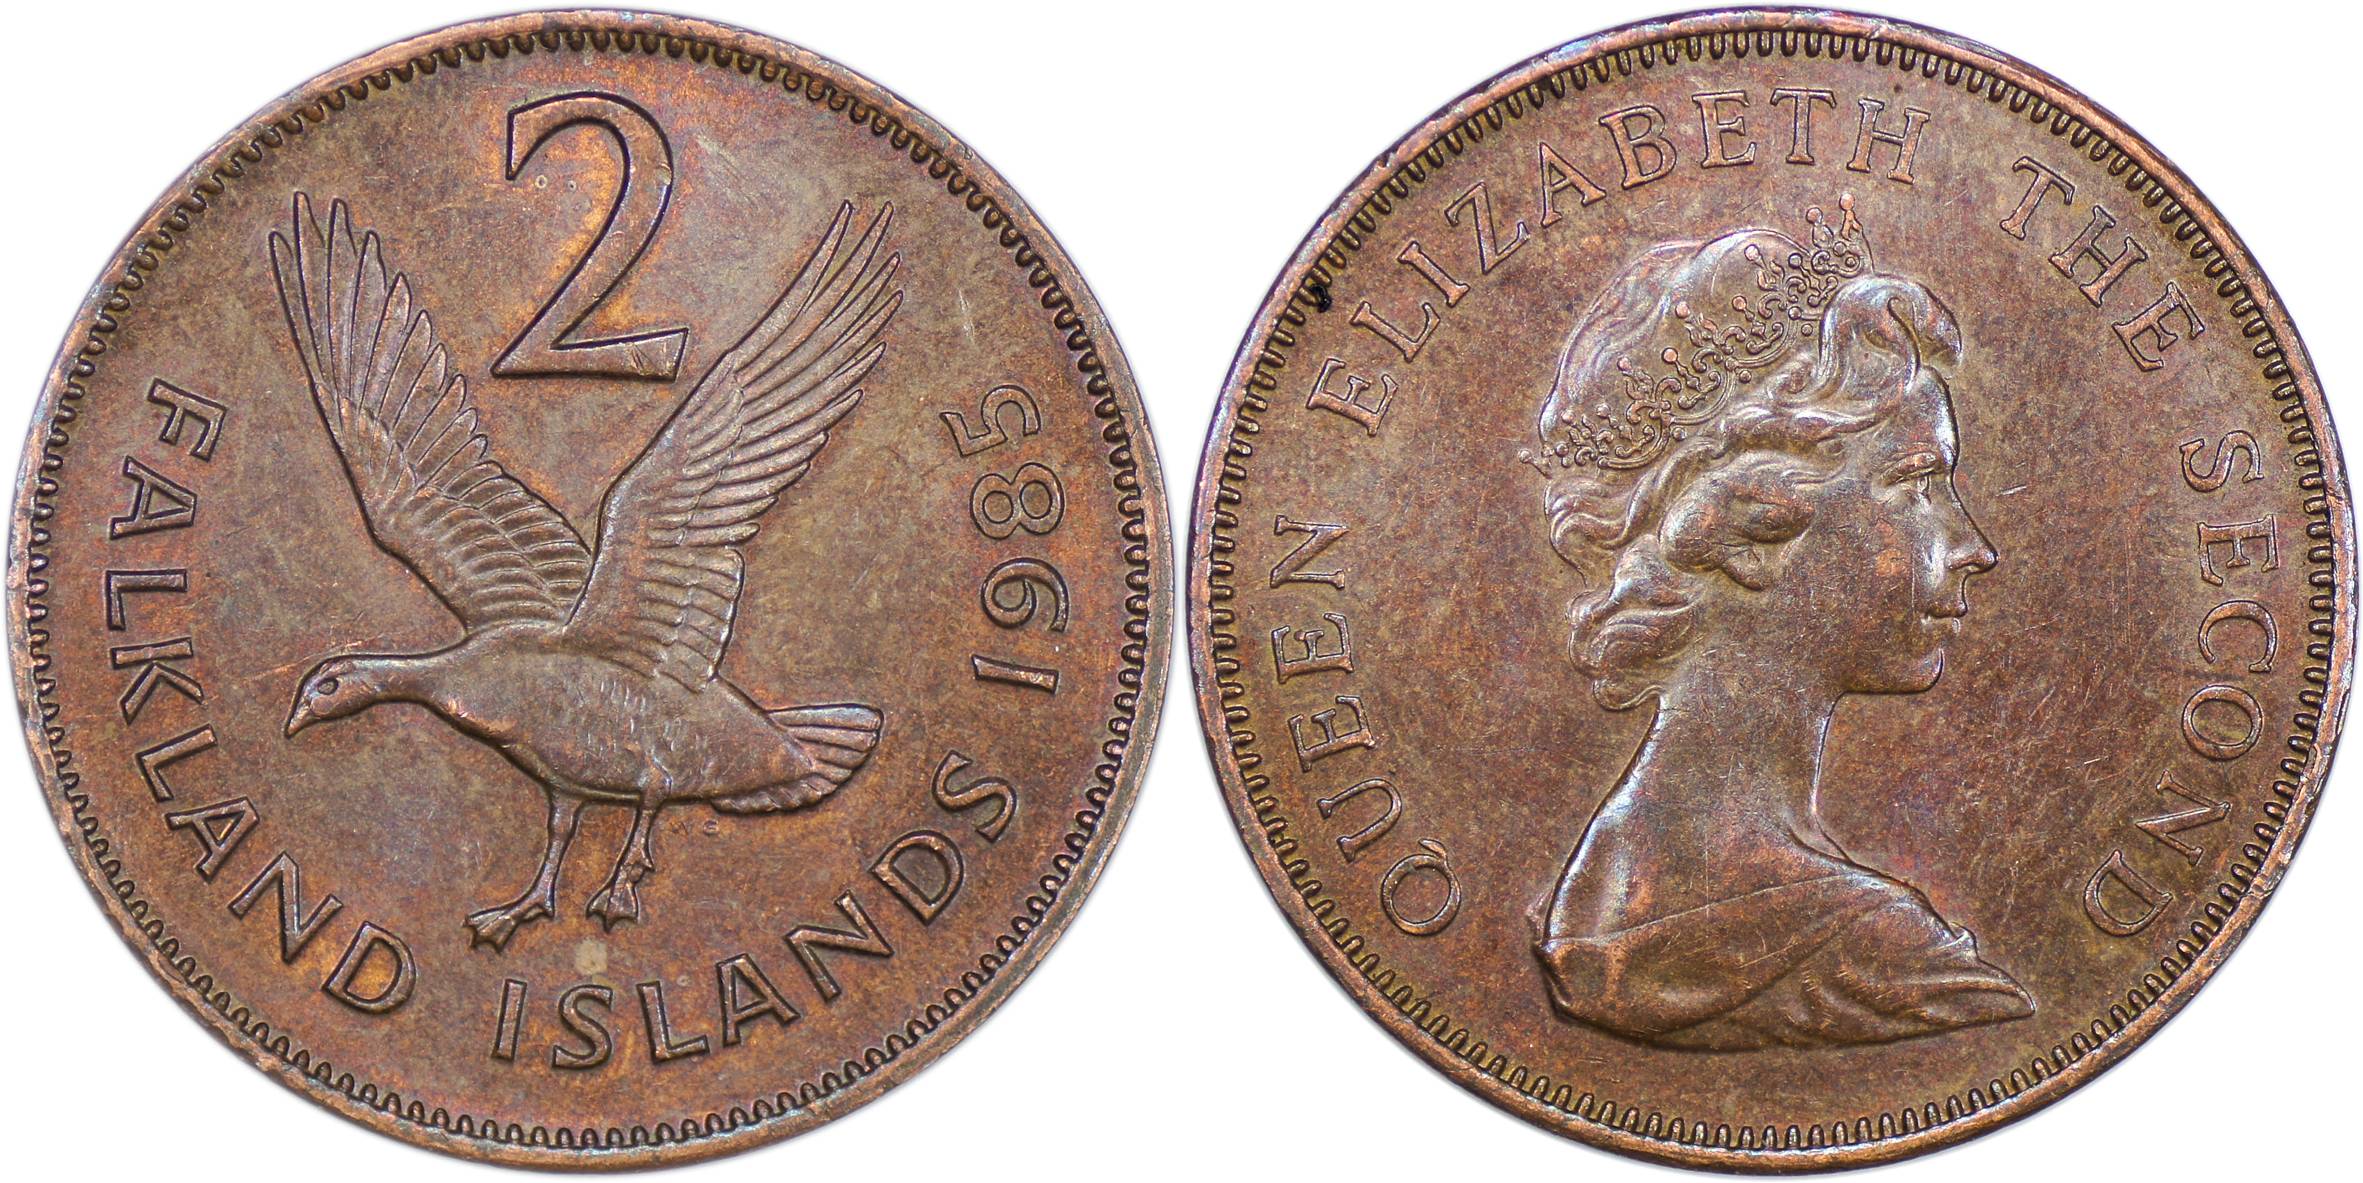 KM 3 Falkland Islands 1985 2 Pence.jpg